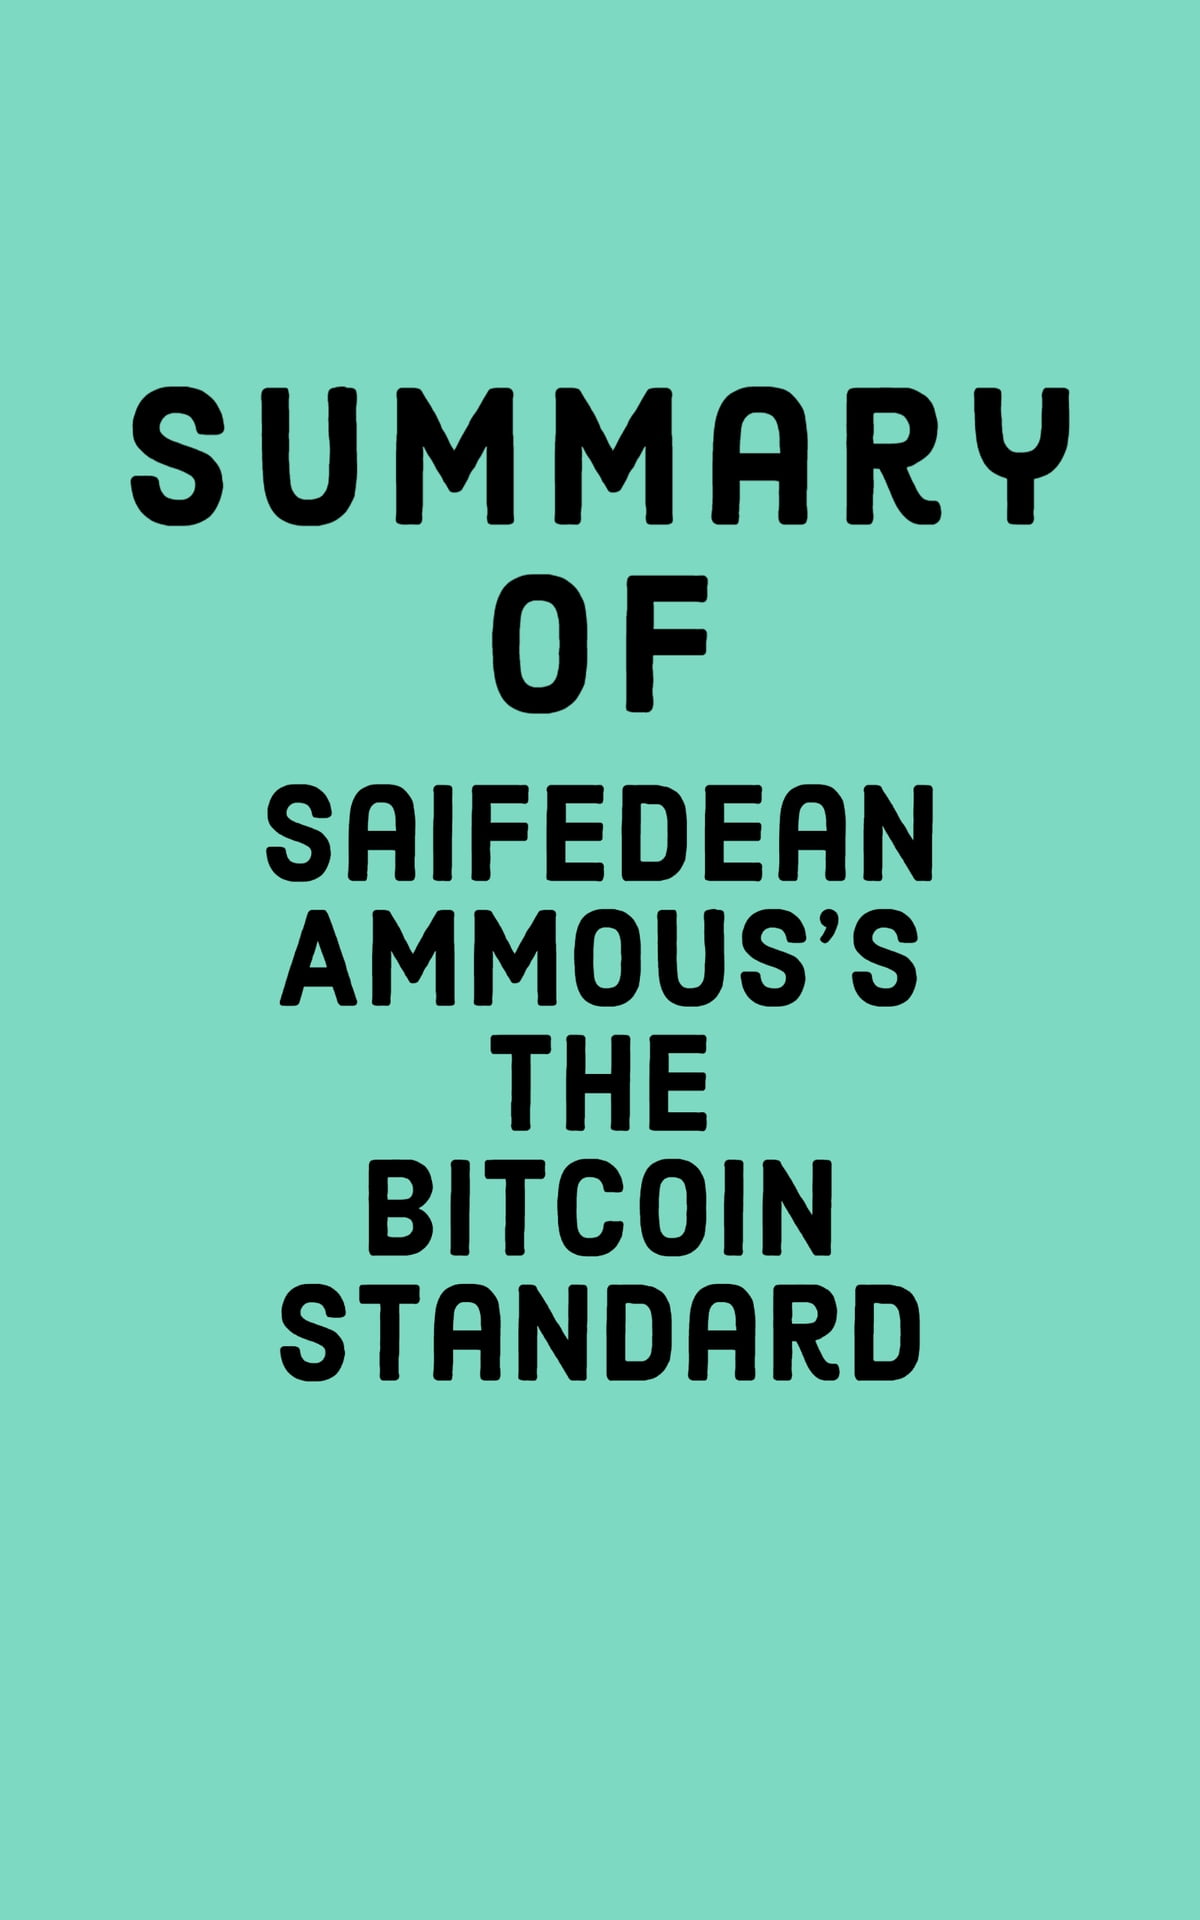 Summary of Saifedean Ammous's The Bitcoin Standard by Slingshot Books - Audiobook - cryptolove.fun